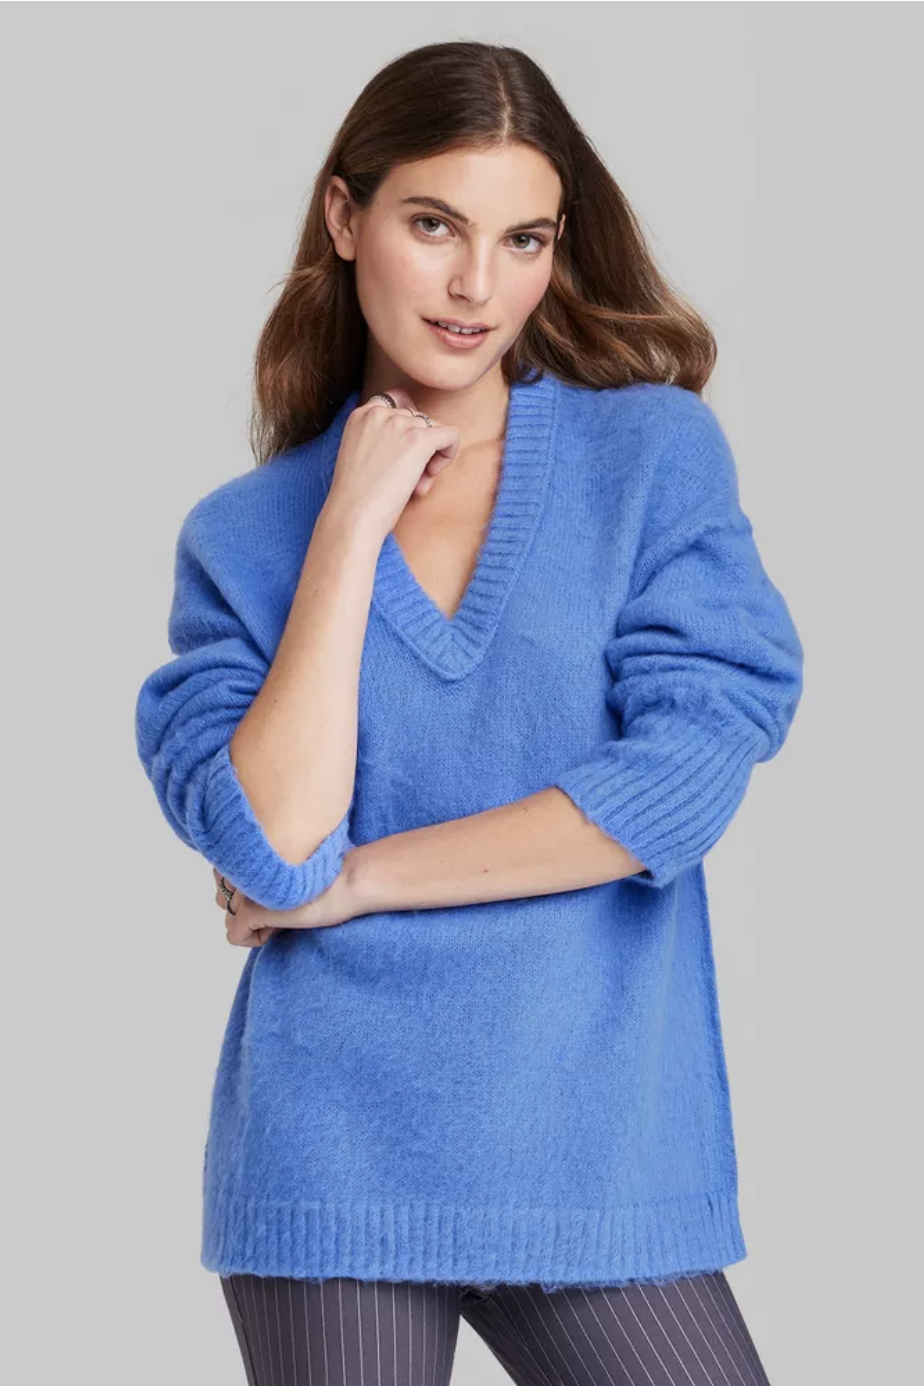 Wild Fable Knit Sweater Vest Green/Blue- Women's Size XS